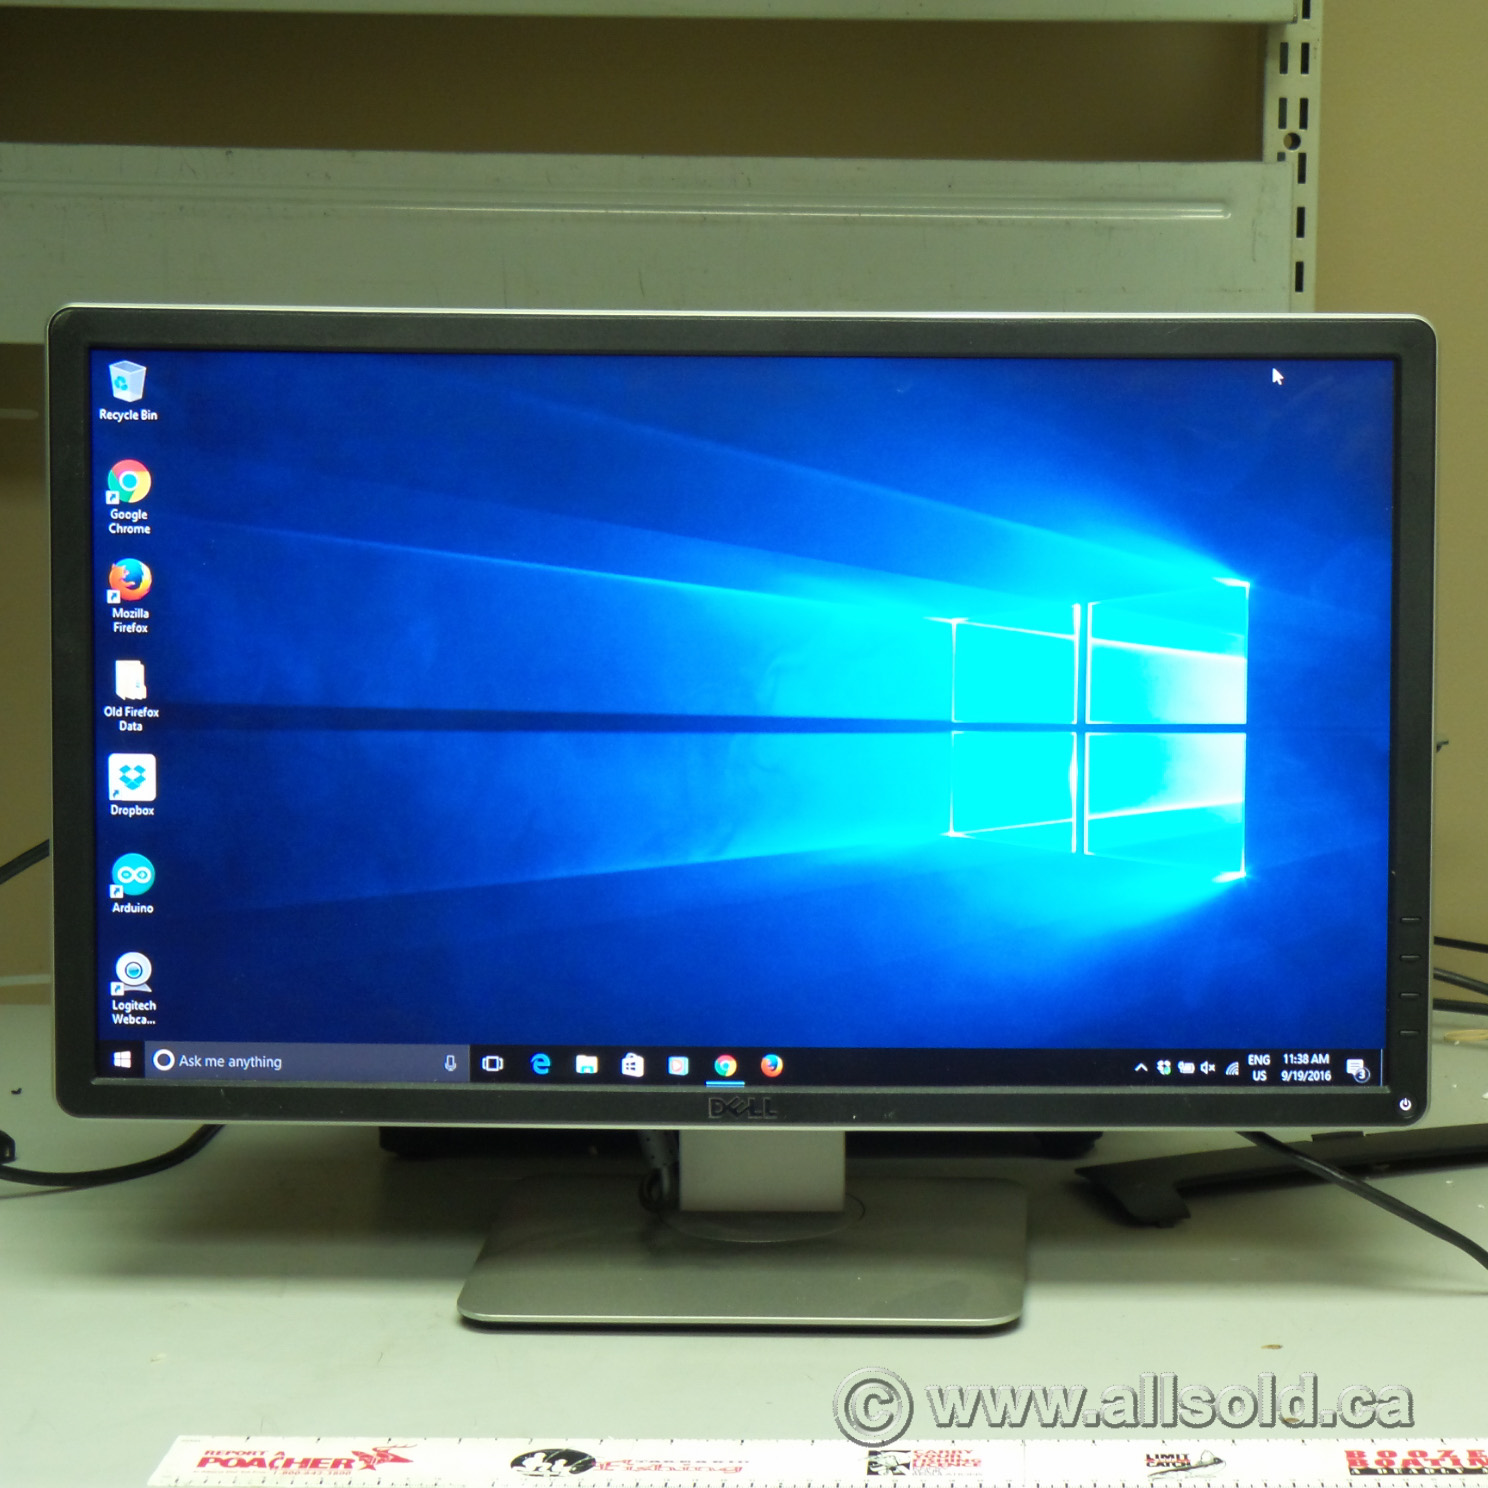 Dell P2314H 23-Inch Screen LED-Lit Monitor - Allsold.ca - Buy 